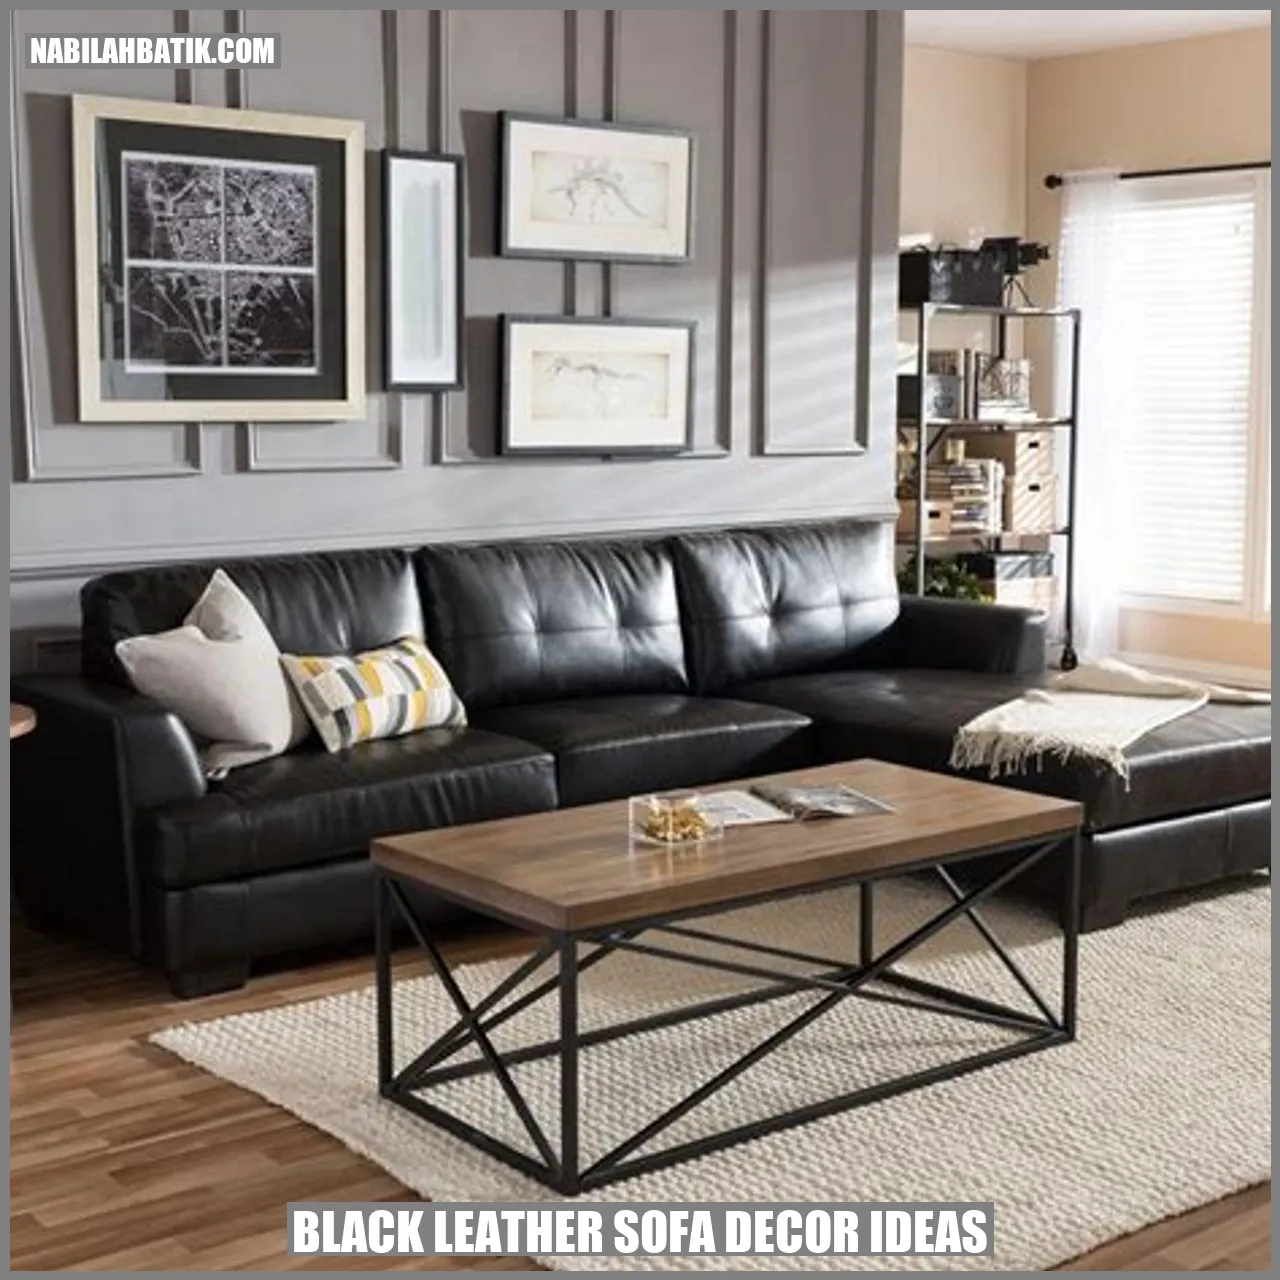 Black Leather Sofa Decorating Ideas